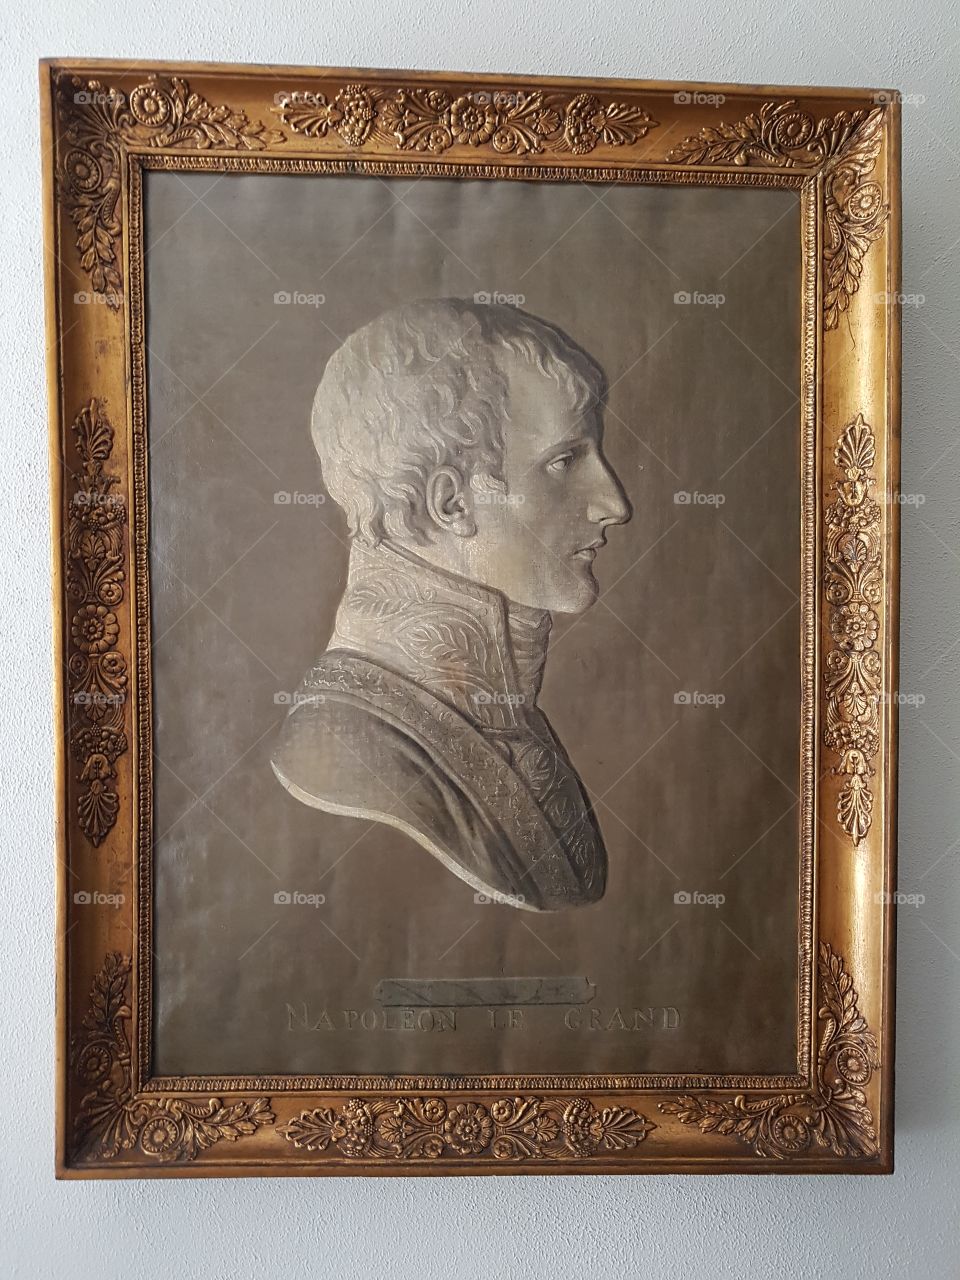 Napoleon Bonaparte framed portrait of the grand emperor of France